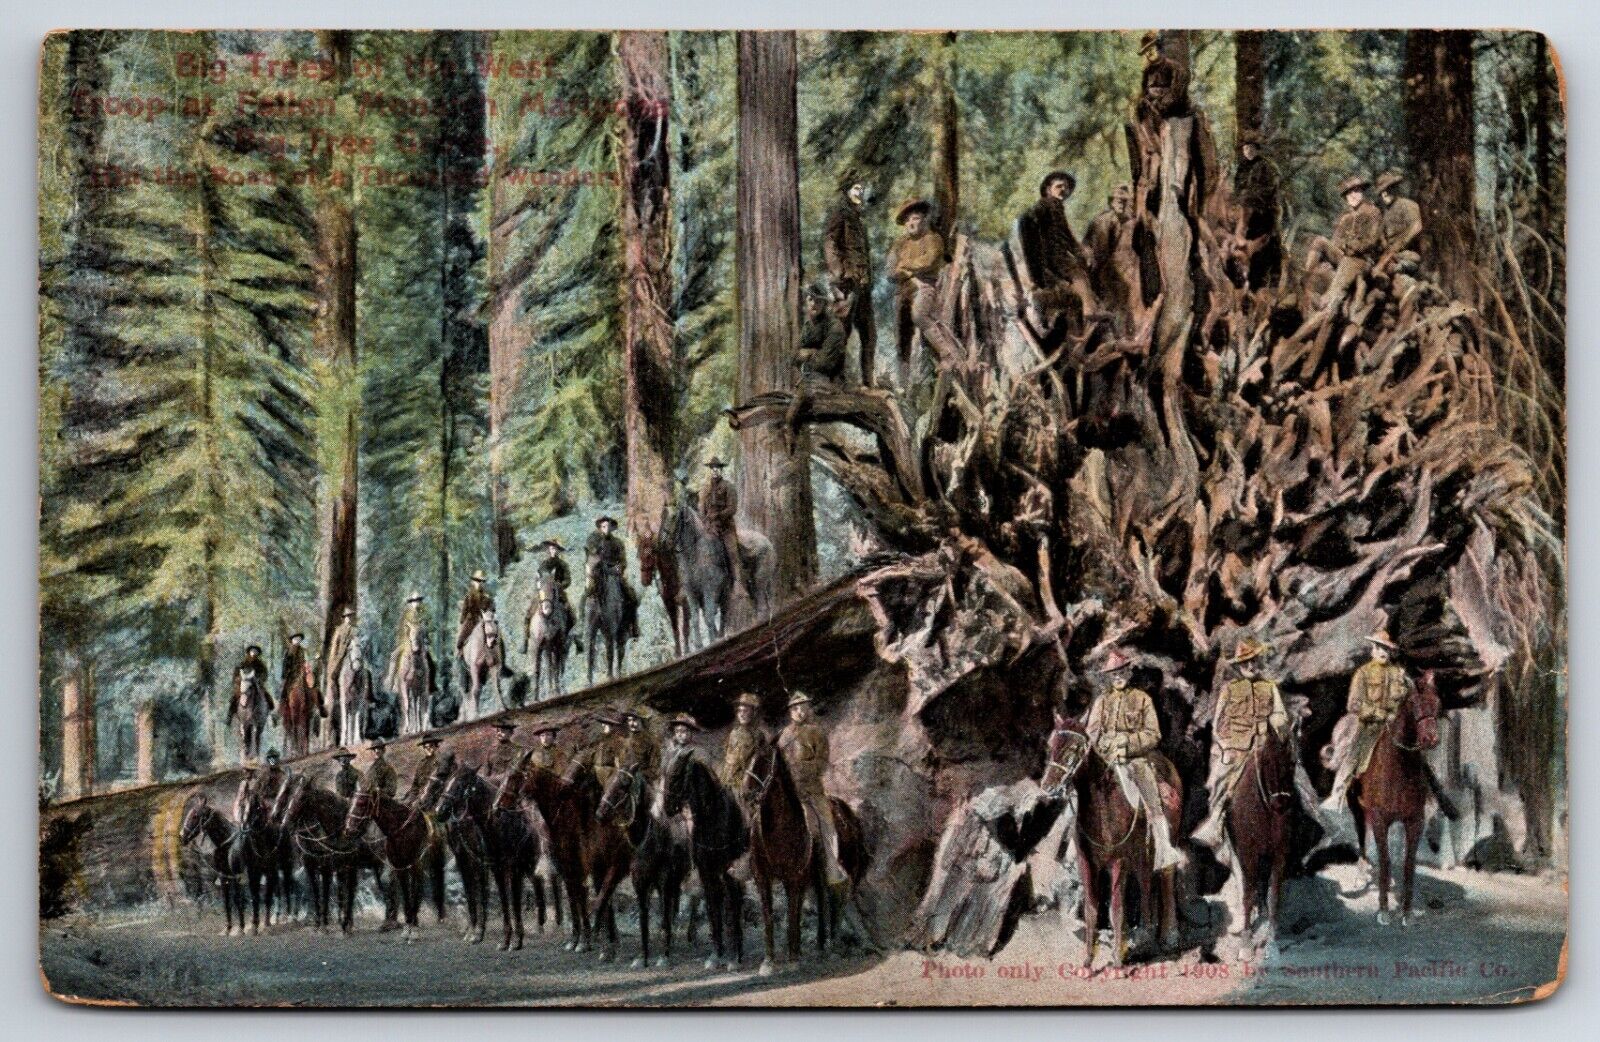 c1908 Troop At Fallen Monarch Mariposa Big Trees Of The West California Postcard